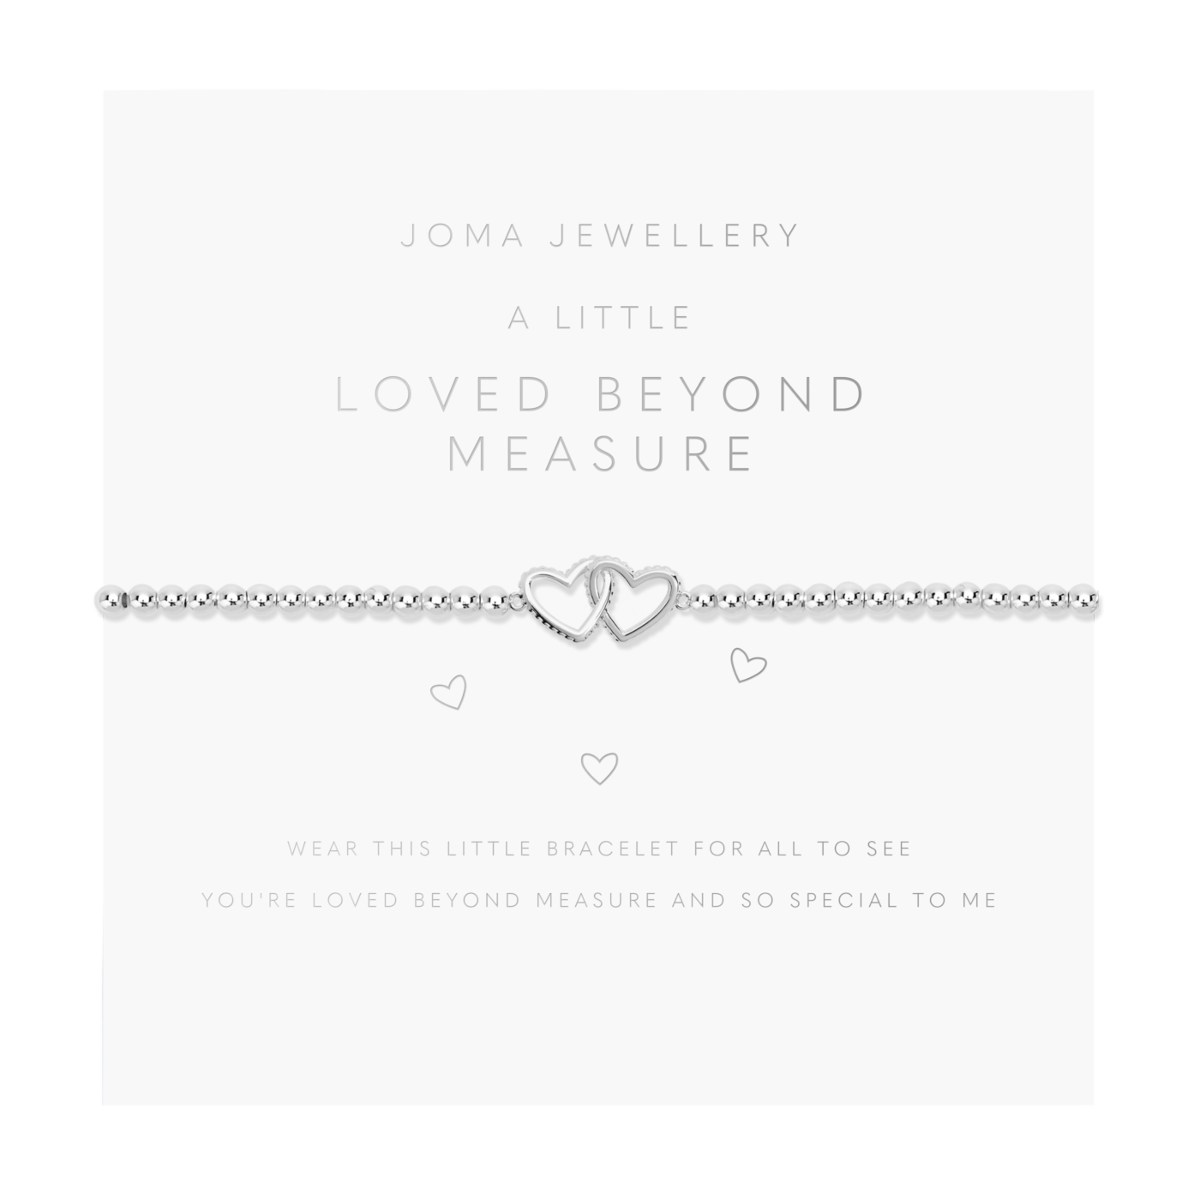 JOMA JEWELLERY | A LITTLE | LOVED BEYOND MEASURE BRACELET